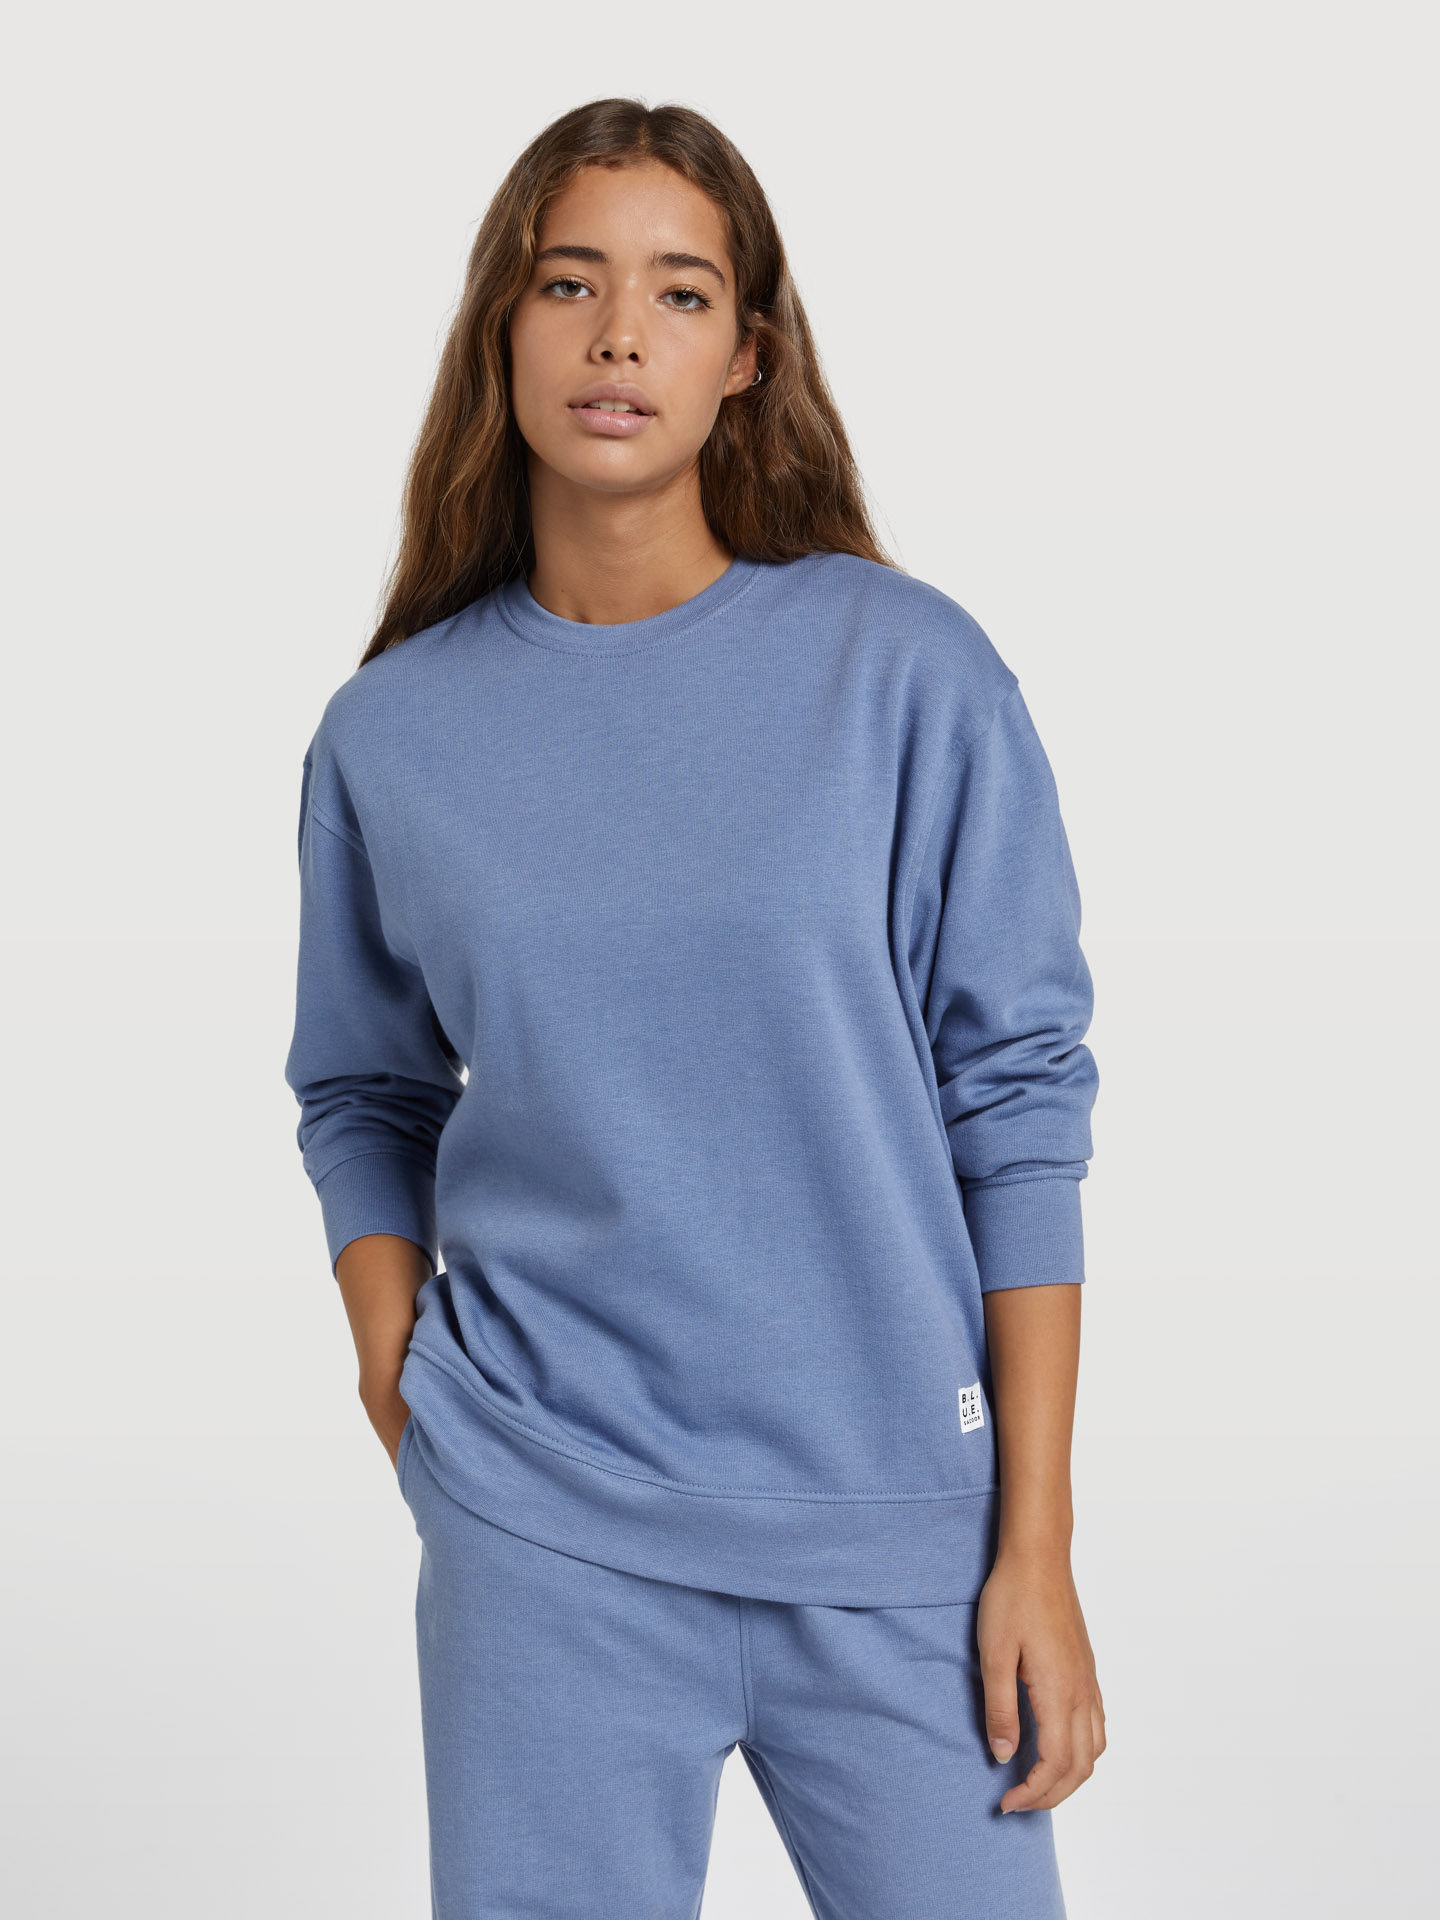 Sweatshirt Light Blue Casual Woman